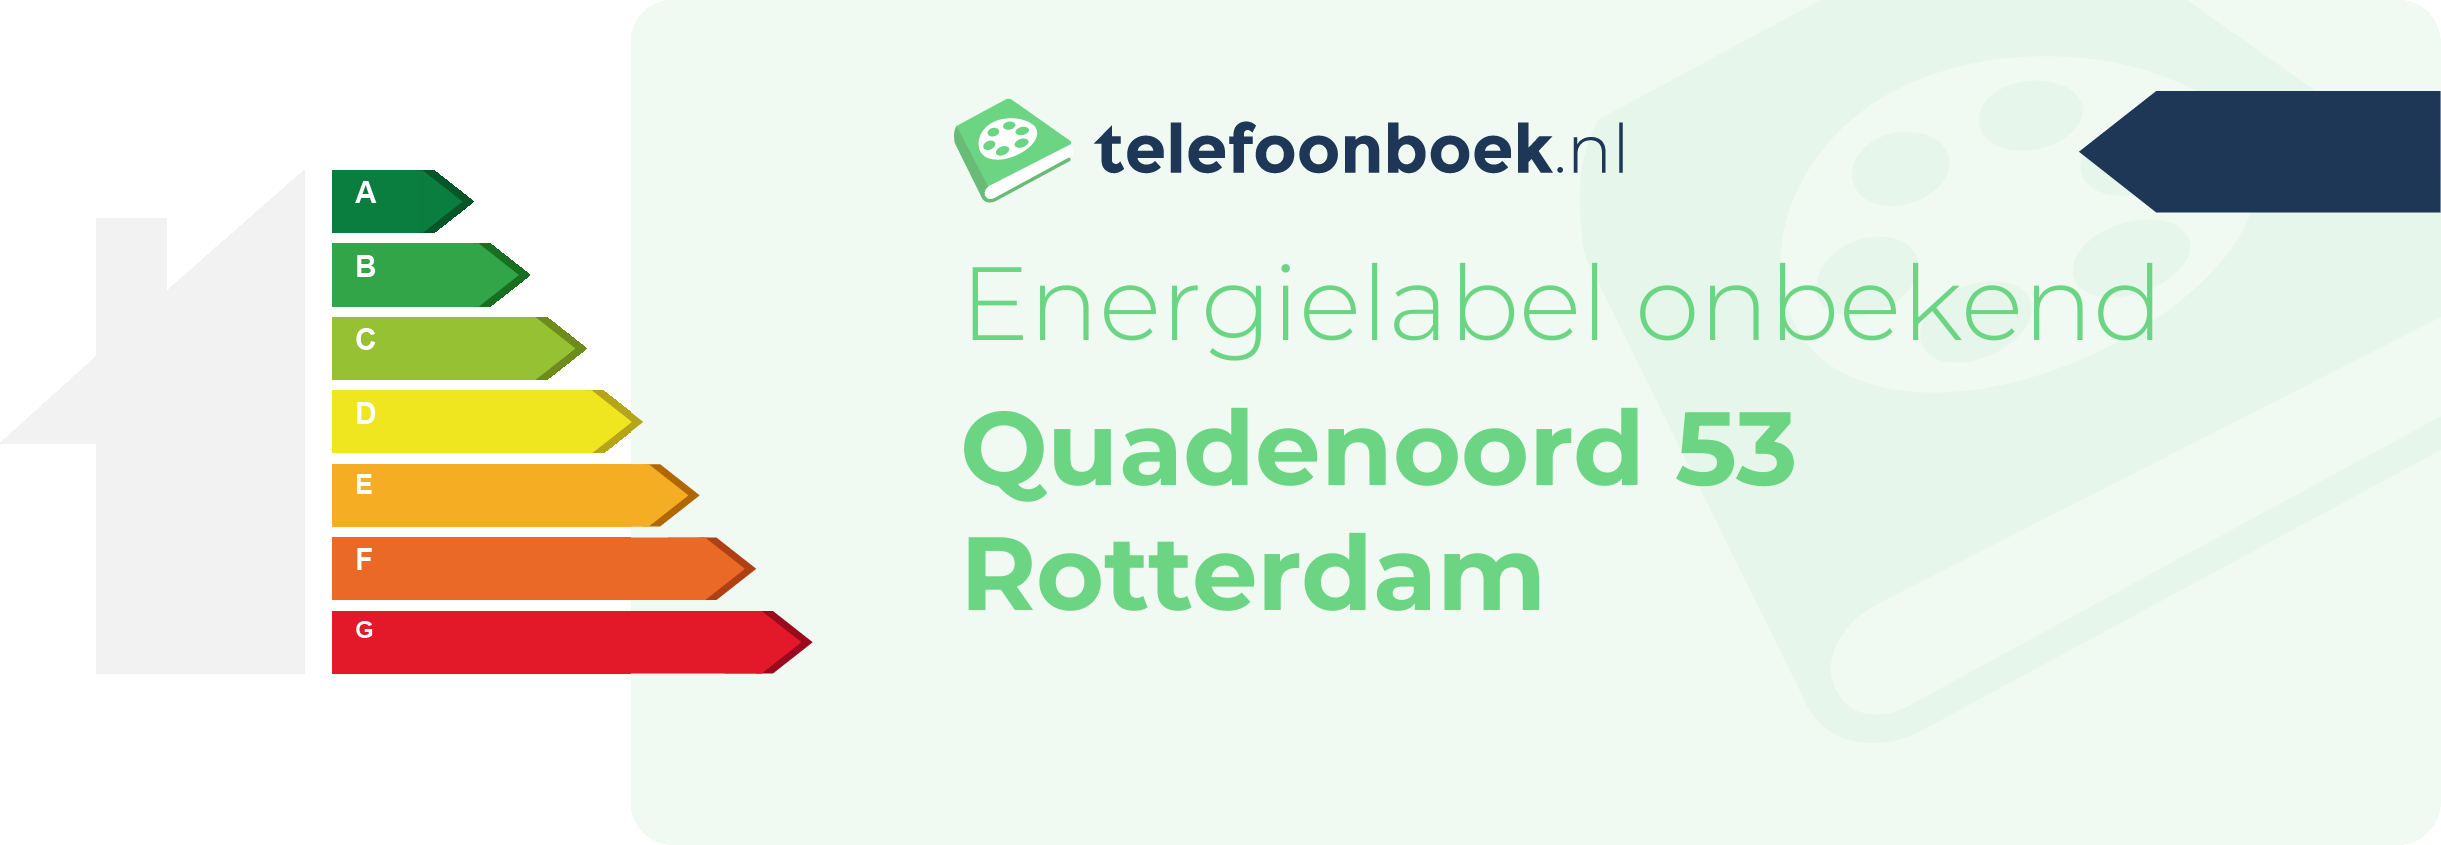 Energielabel Quadenoord 53 Rotterdam